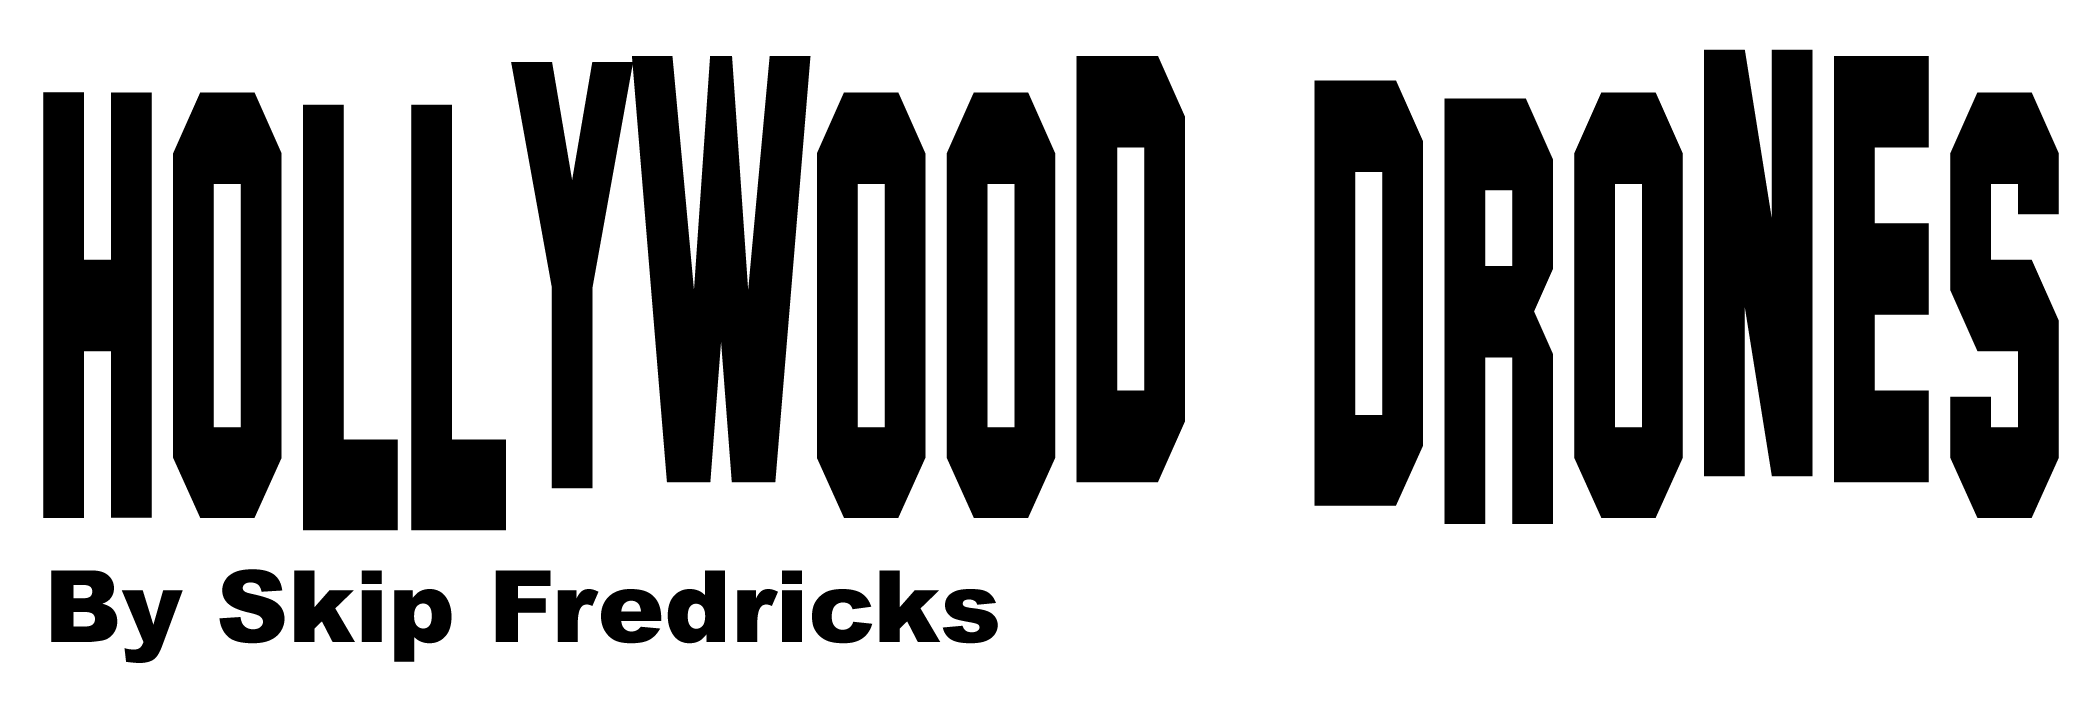 Hollywood Drones Logo Black Letters Transparent 2021-min